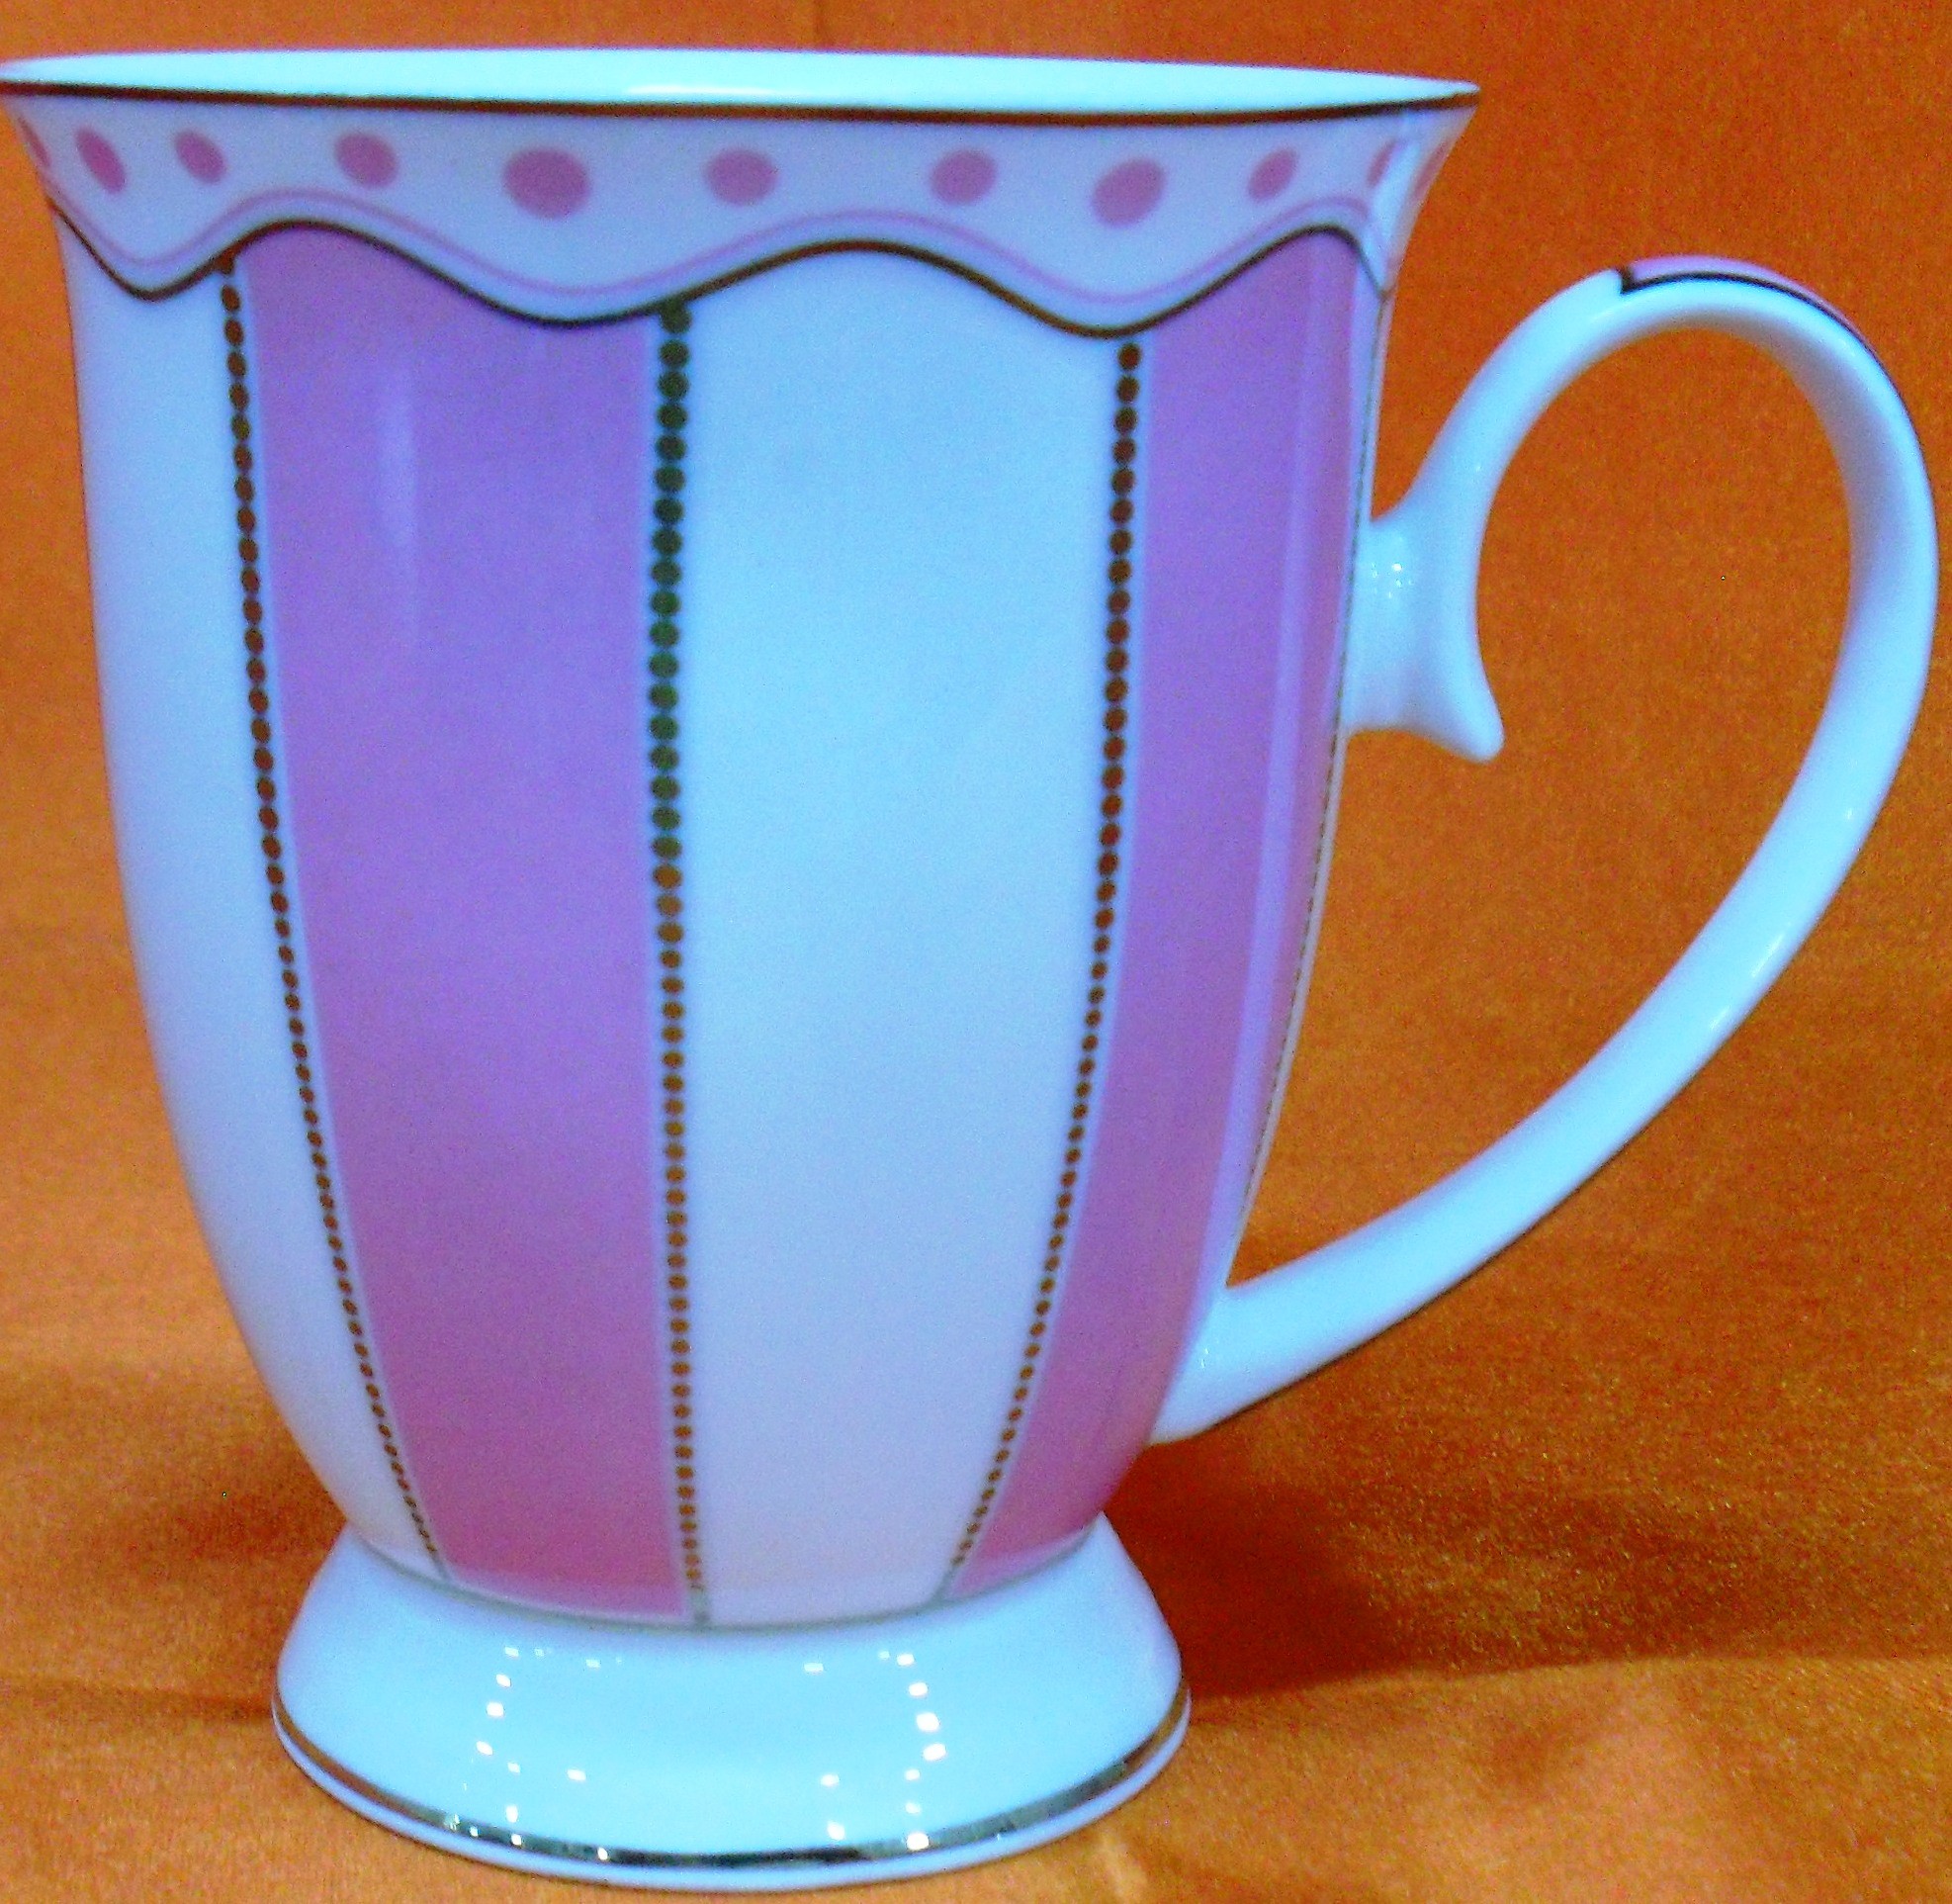 HI LUXE Elegent Mug Set (pink)